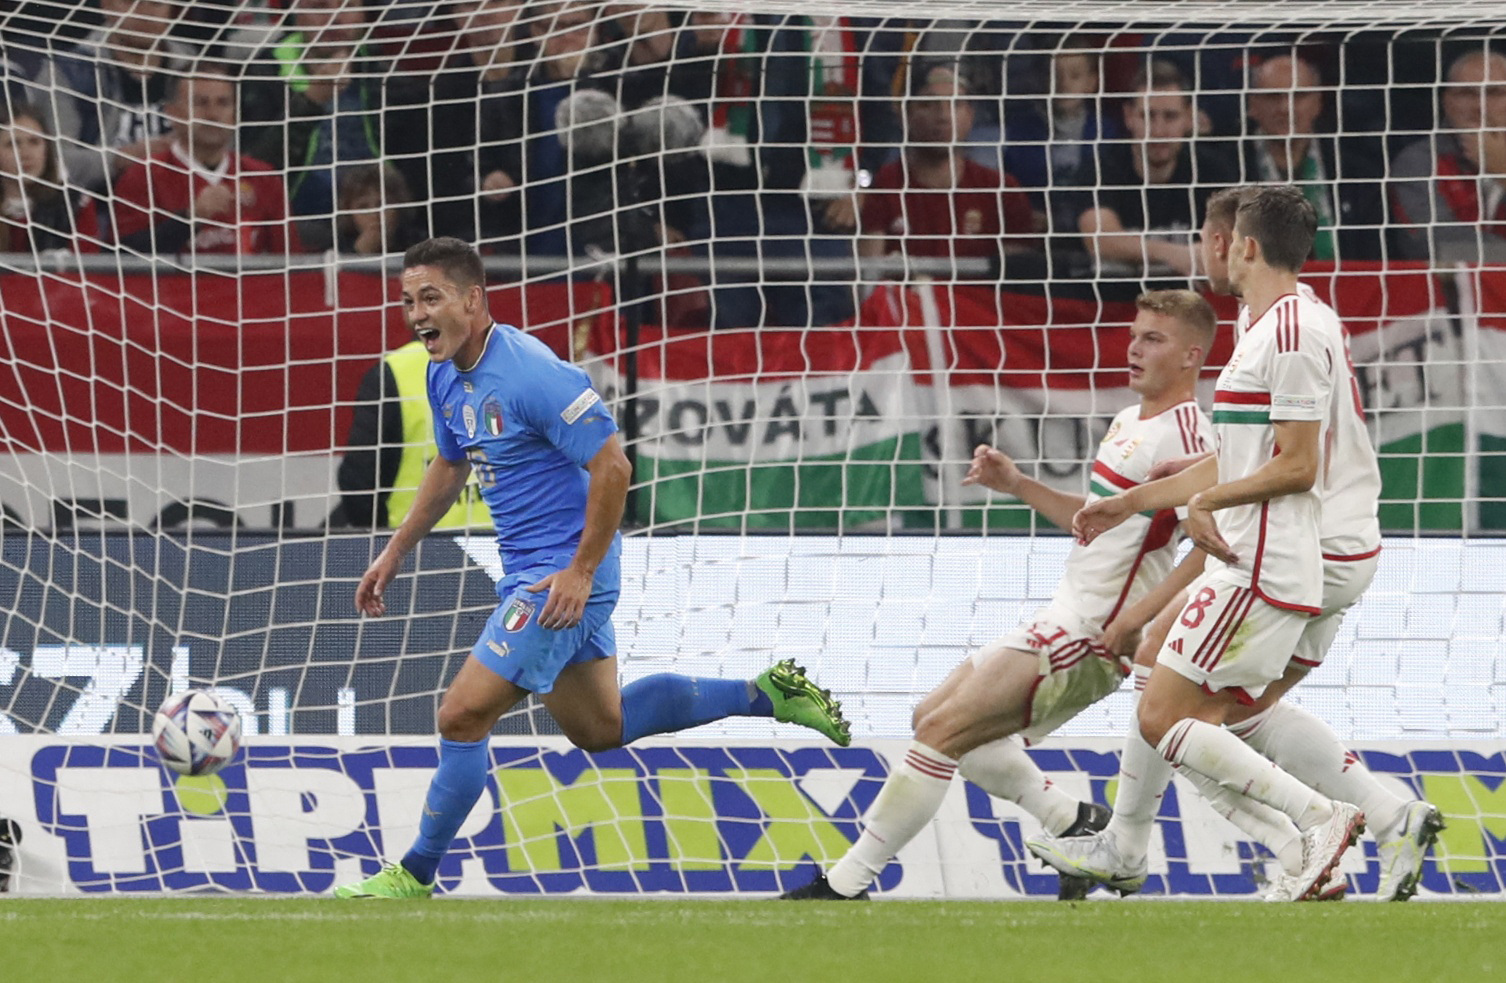 Nations League: Ουγγαρία – Ιταλία 0-2 και Αγγλία – Γερμανία 3-3 στη League A – Όλα τα αποτελέσματα